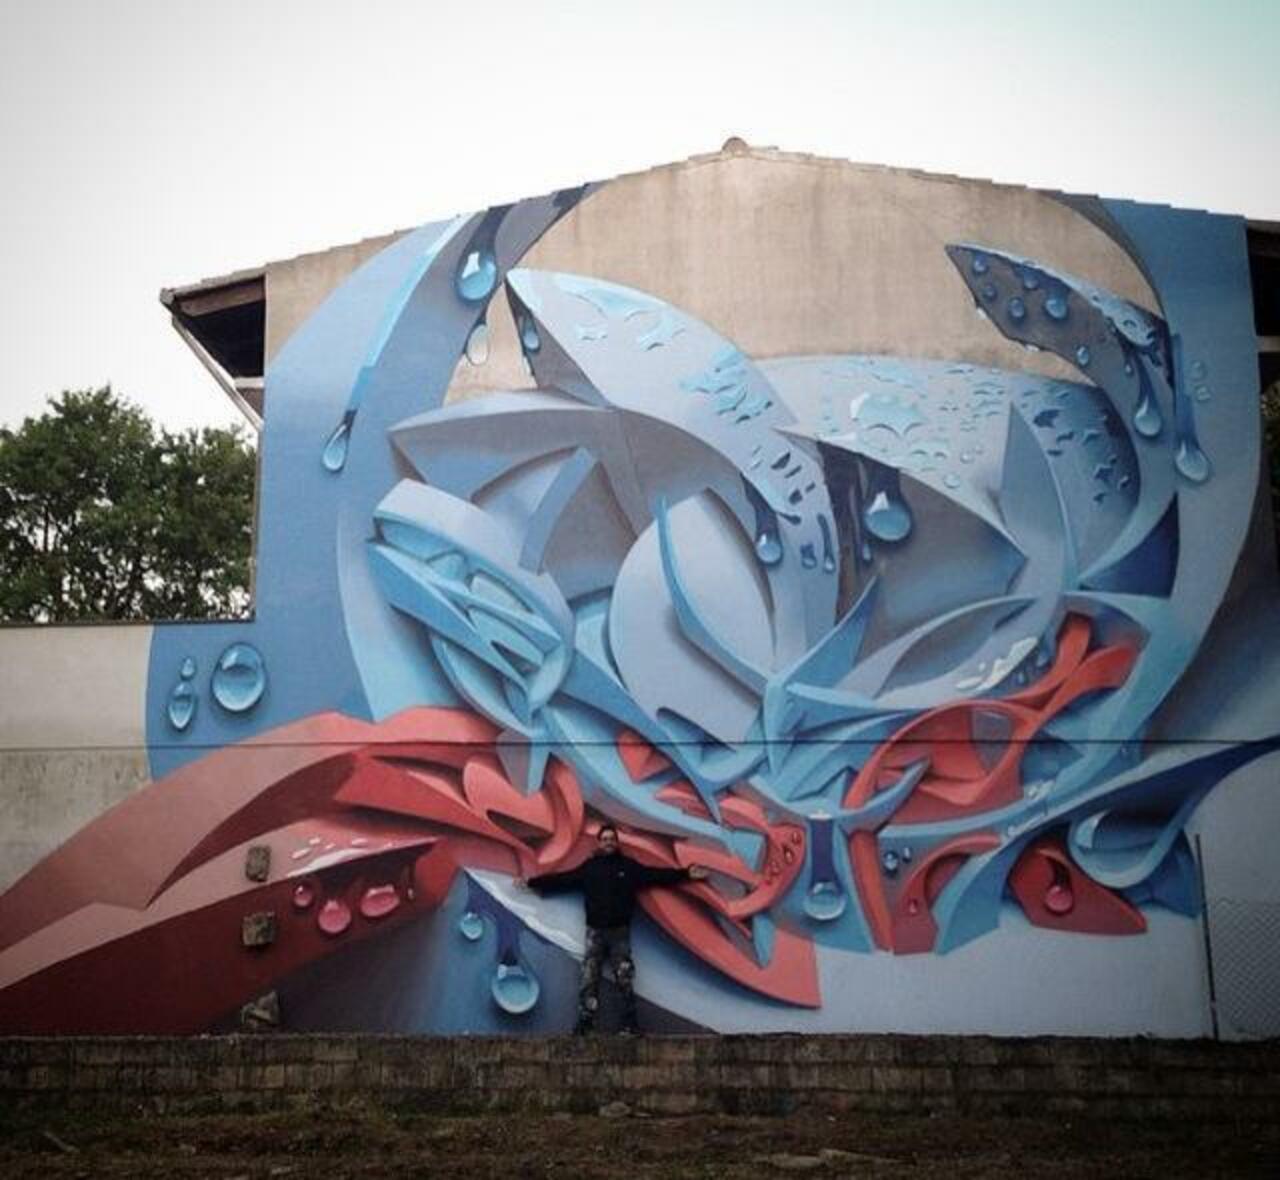 Amazing Graffiti work by Peeta_ead 

#art #arte #graffiti #streetart http://t.co/OKlBMr6quO